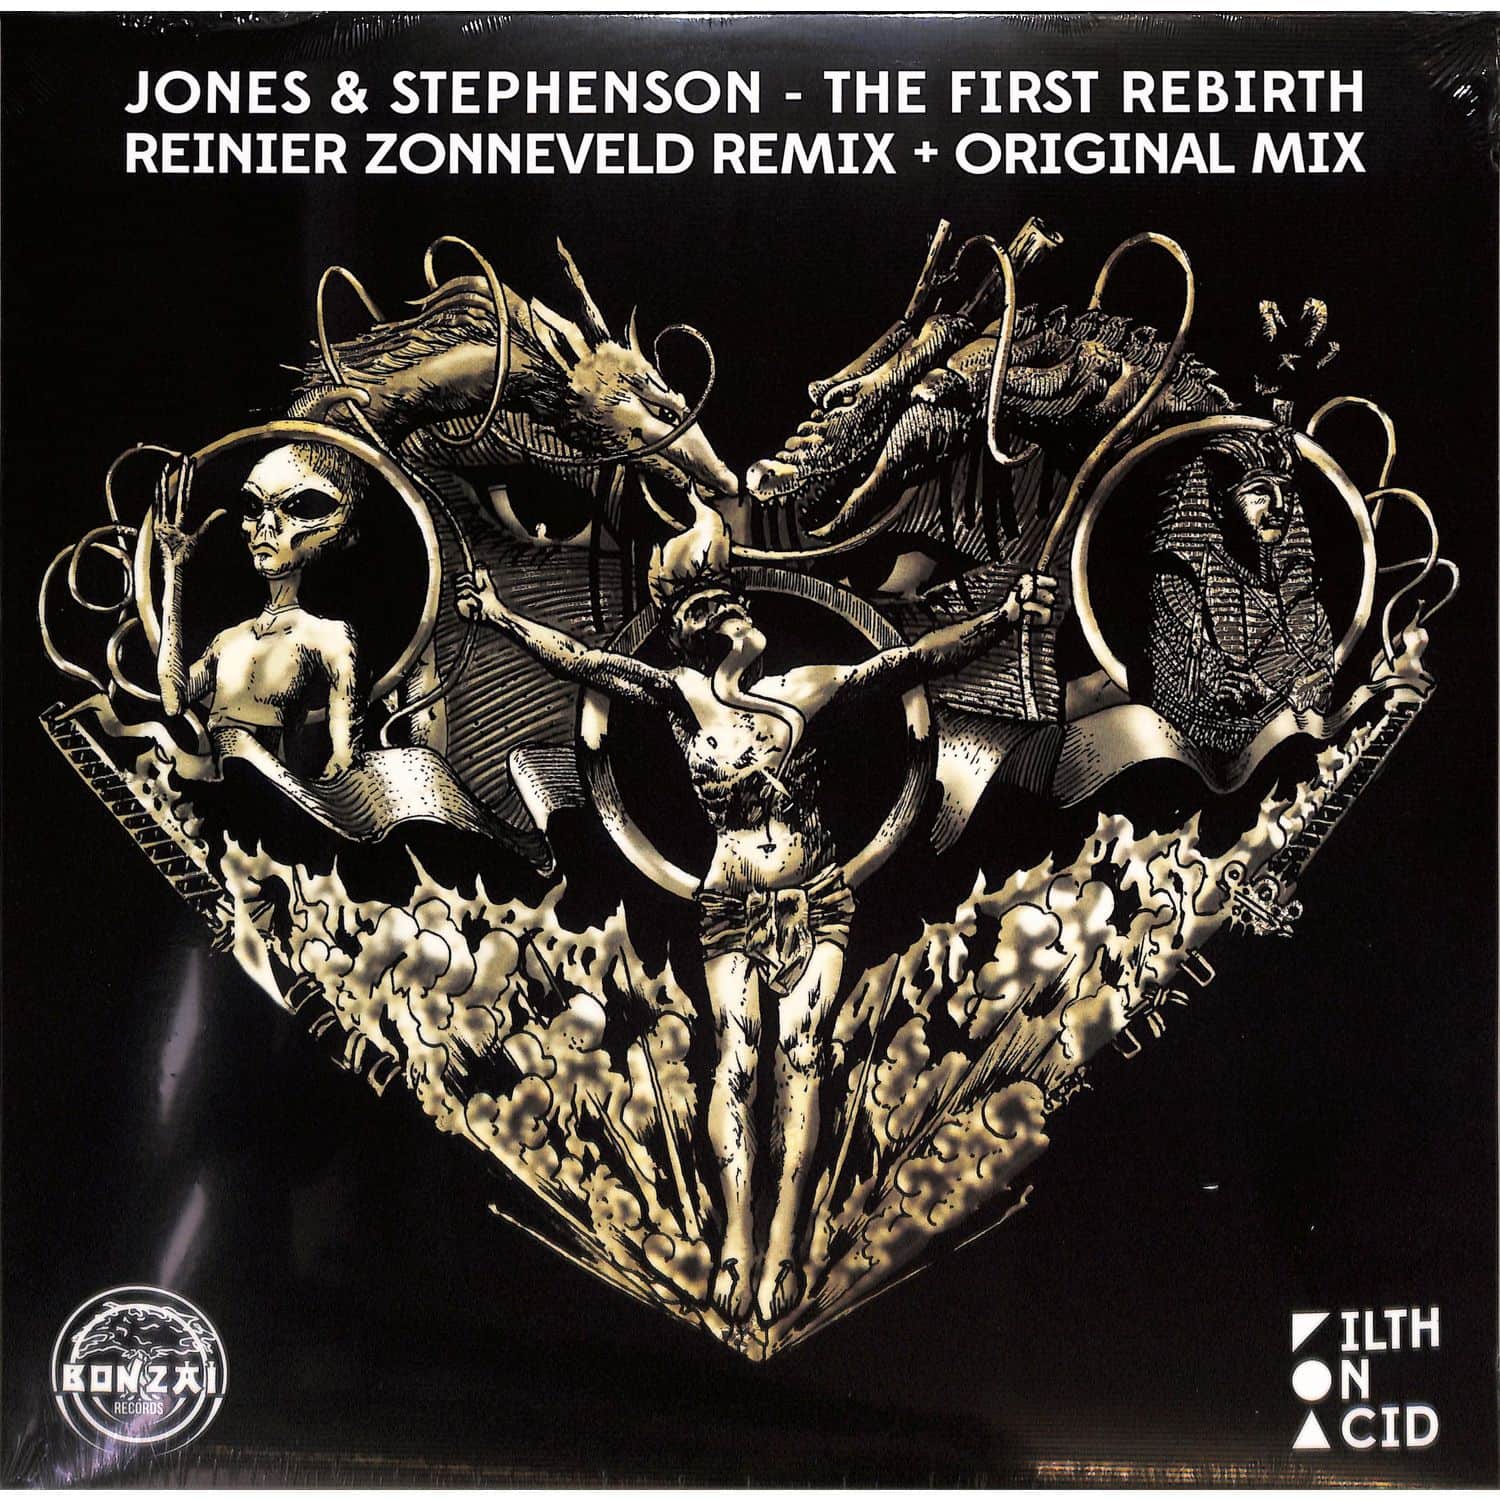 Jones & Stephenson - THE FIRST REBIRTH 